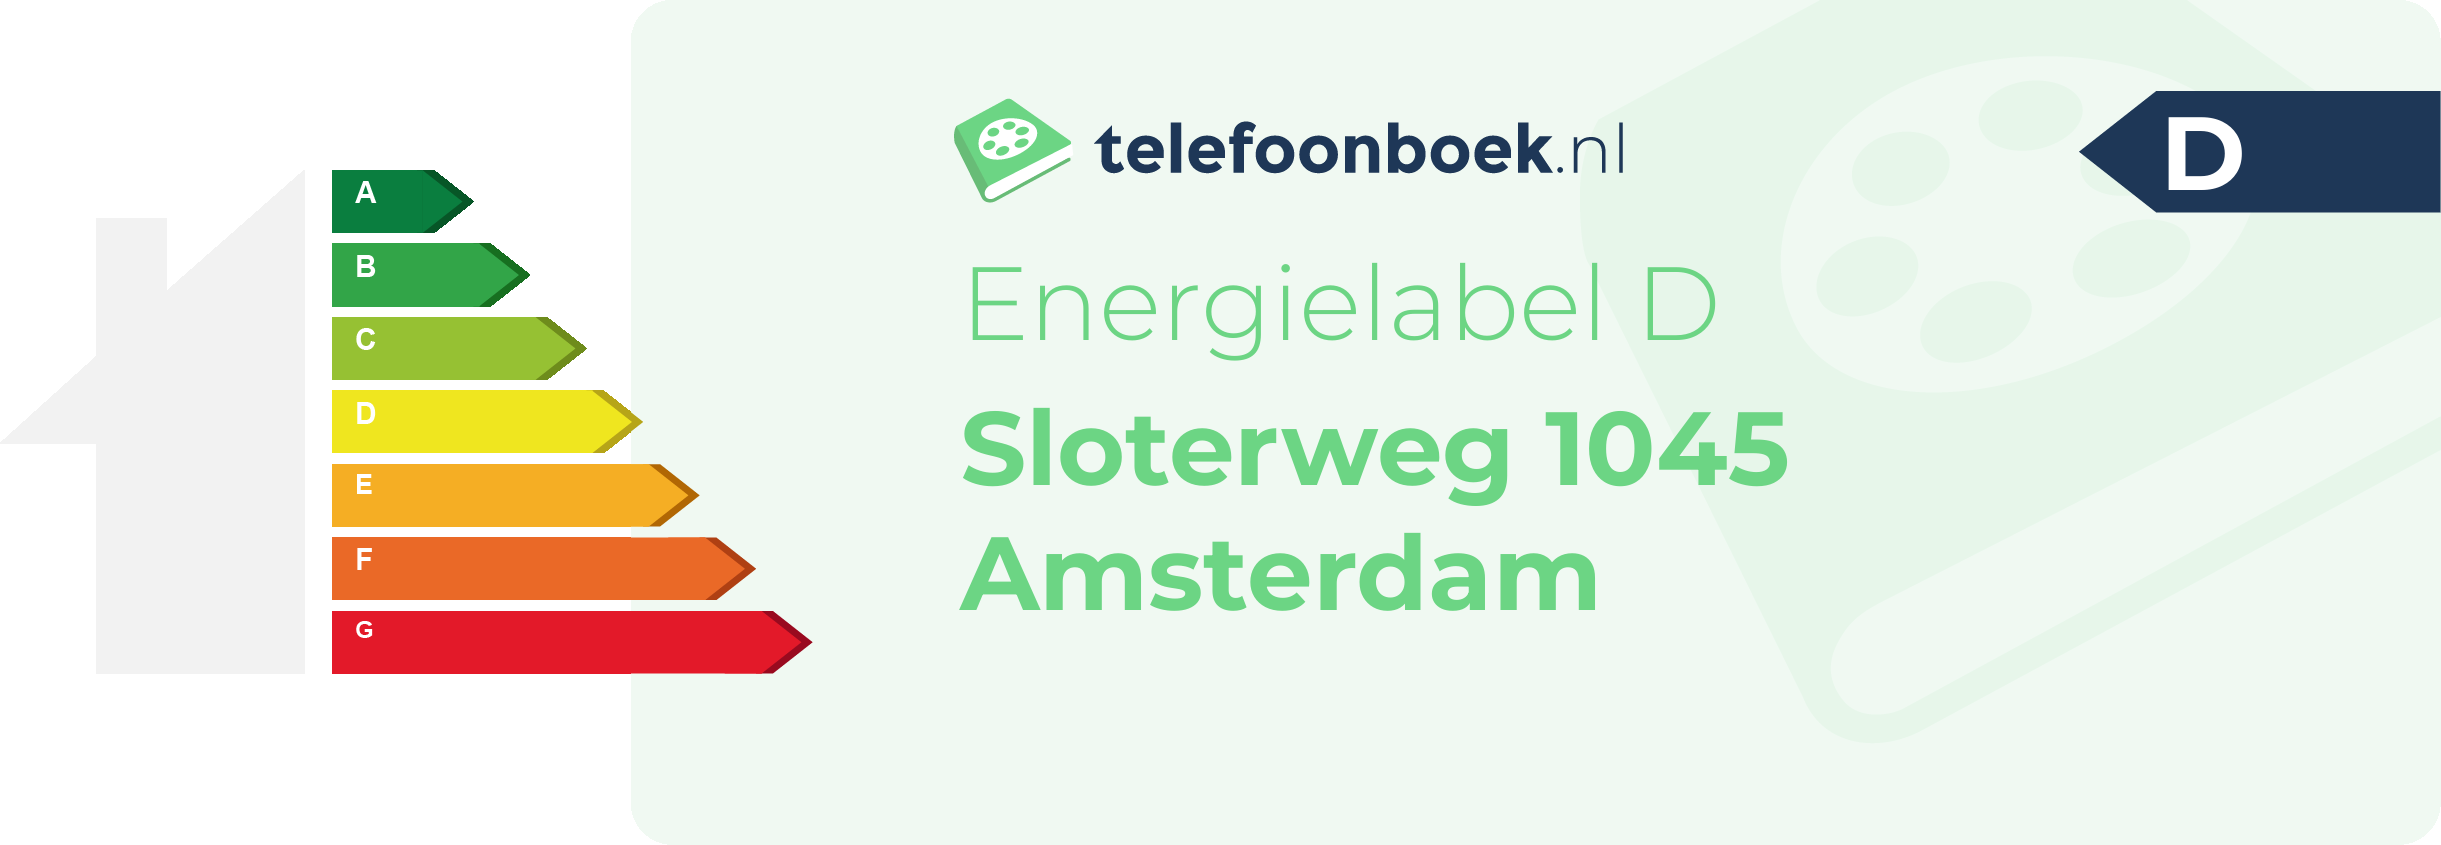 Energielabel Sloterweg 1045 Amsterdam